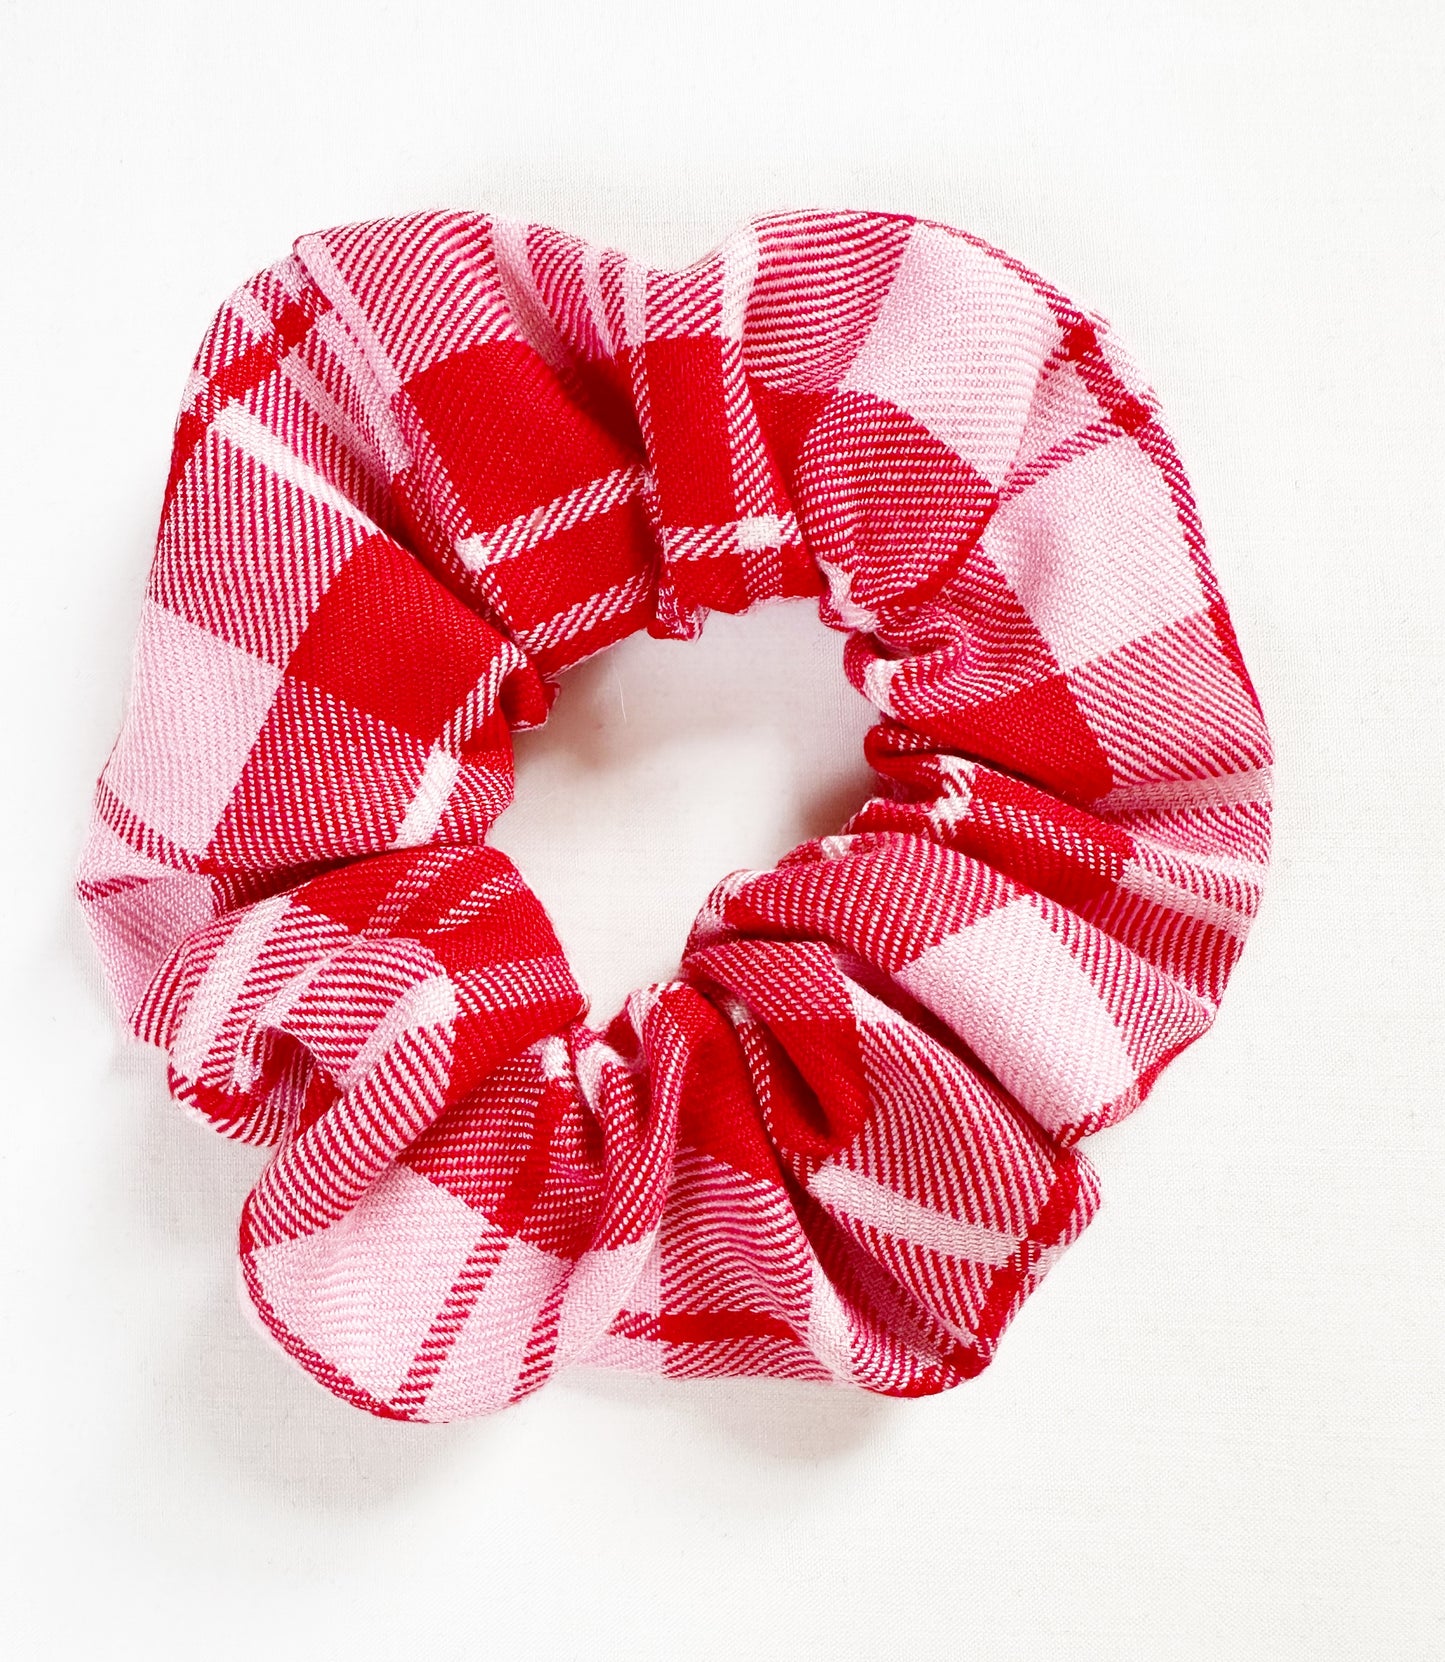 OG scrunchie in red and pink tartan